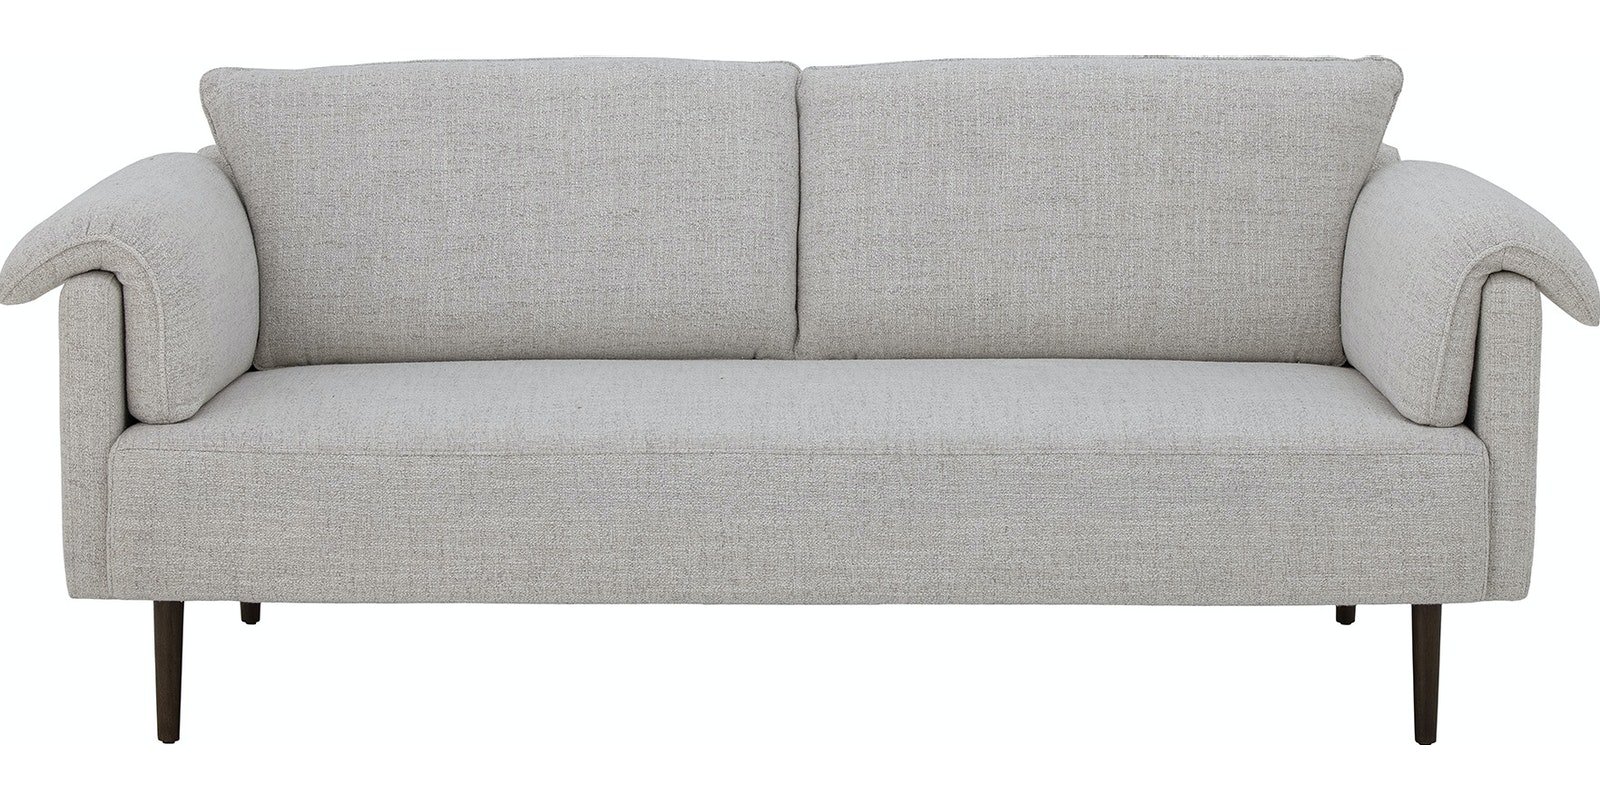 6: Chesham, Sofa, Polyester by Bloomingville (H: 80 cm. x B: 90 cm. x L: 199 cm., Hvid)